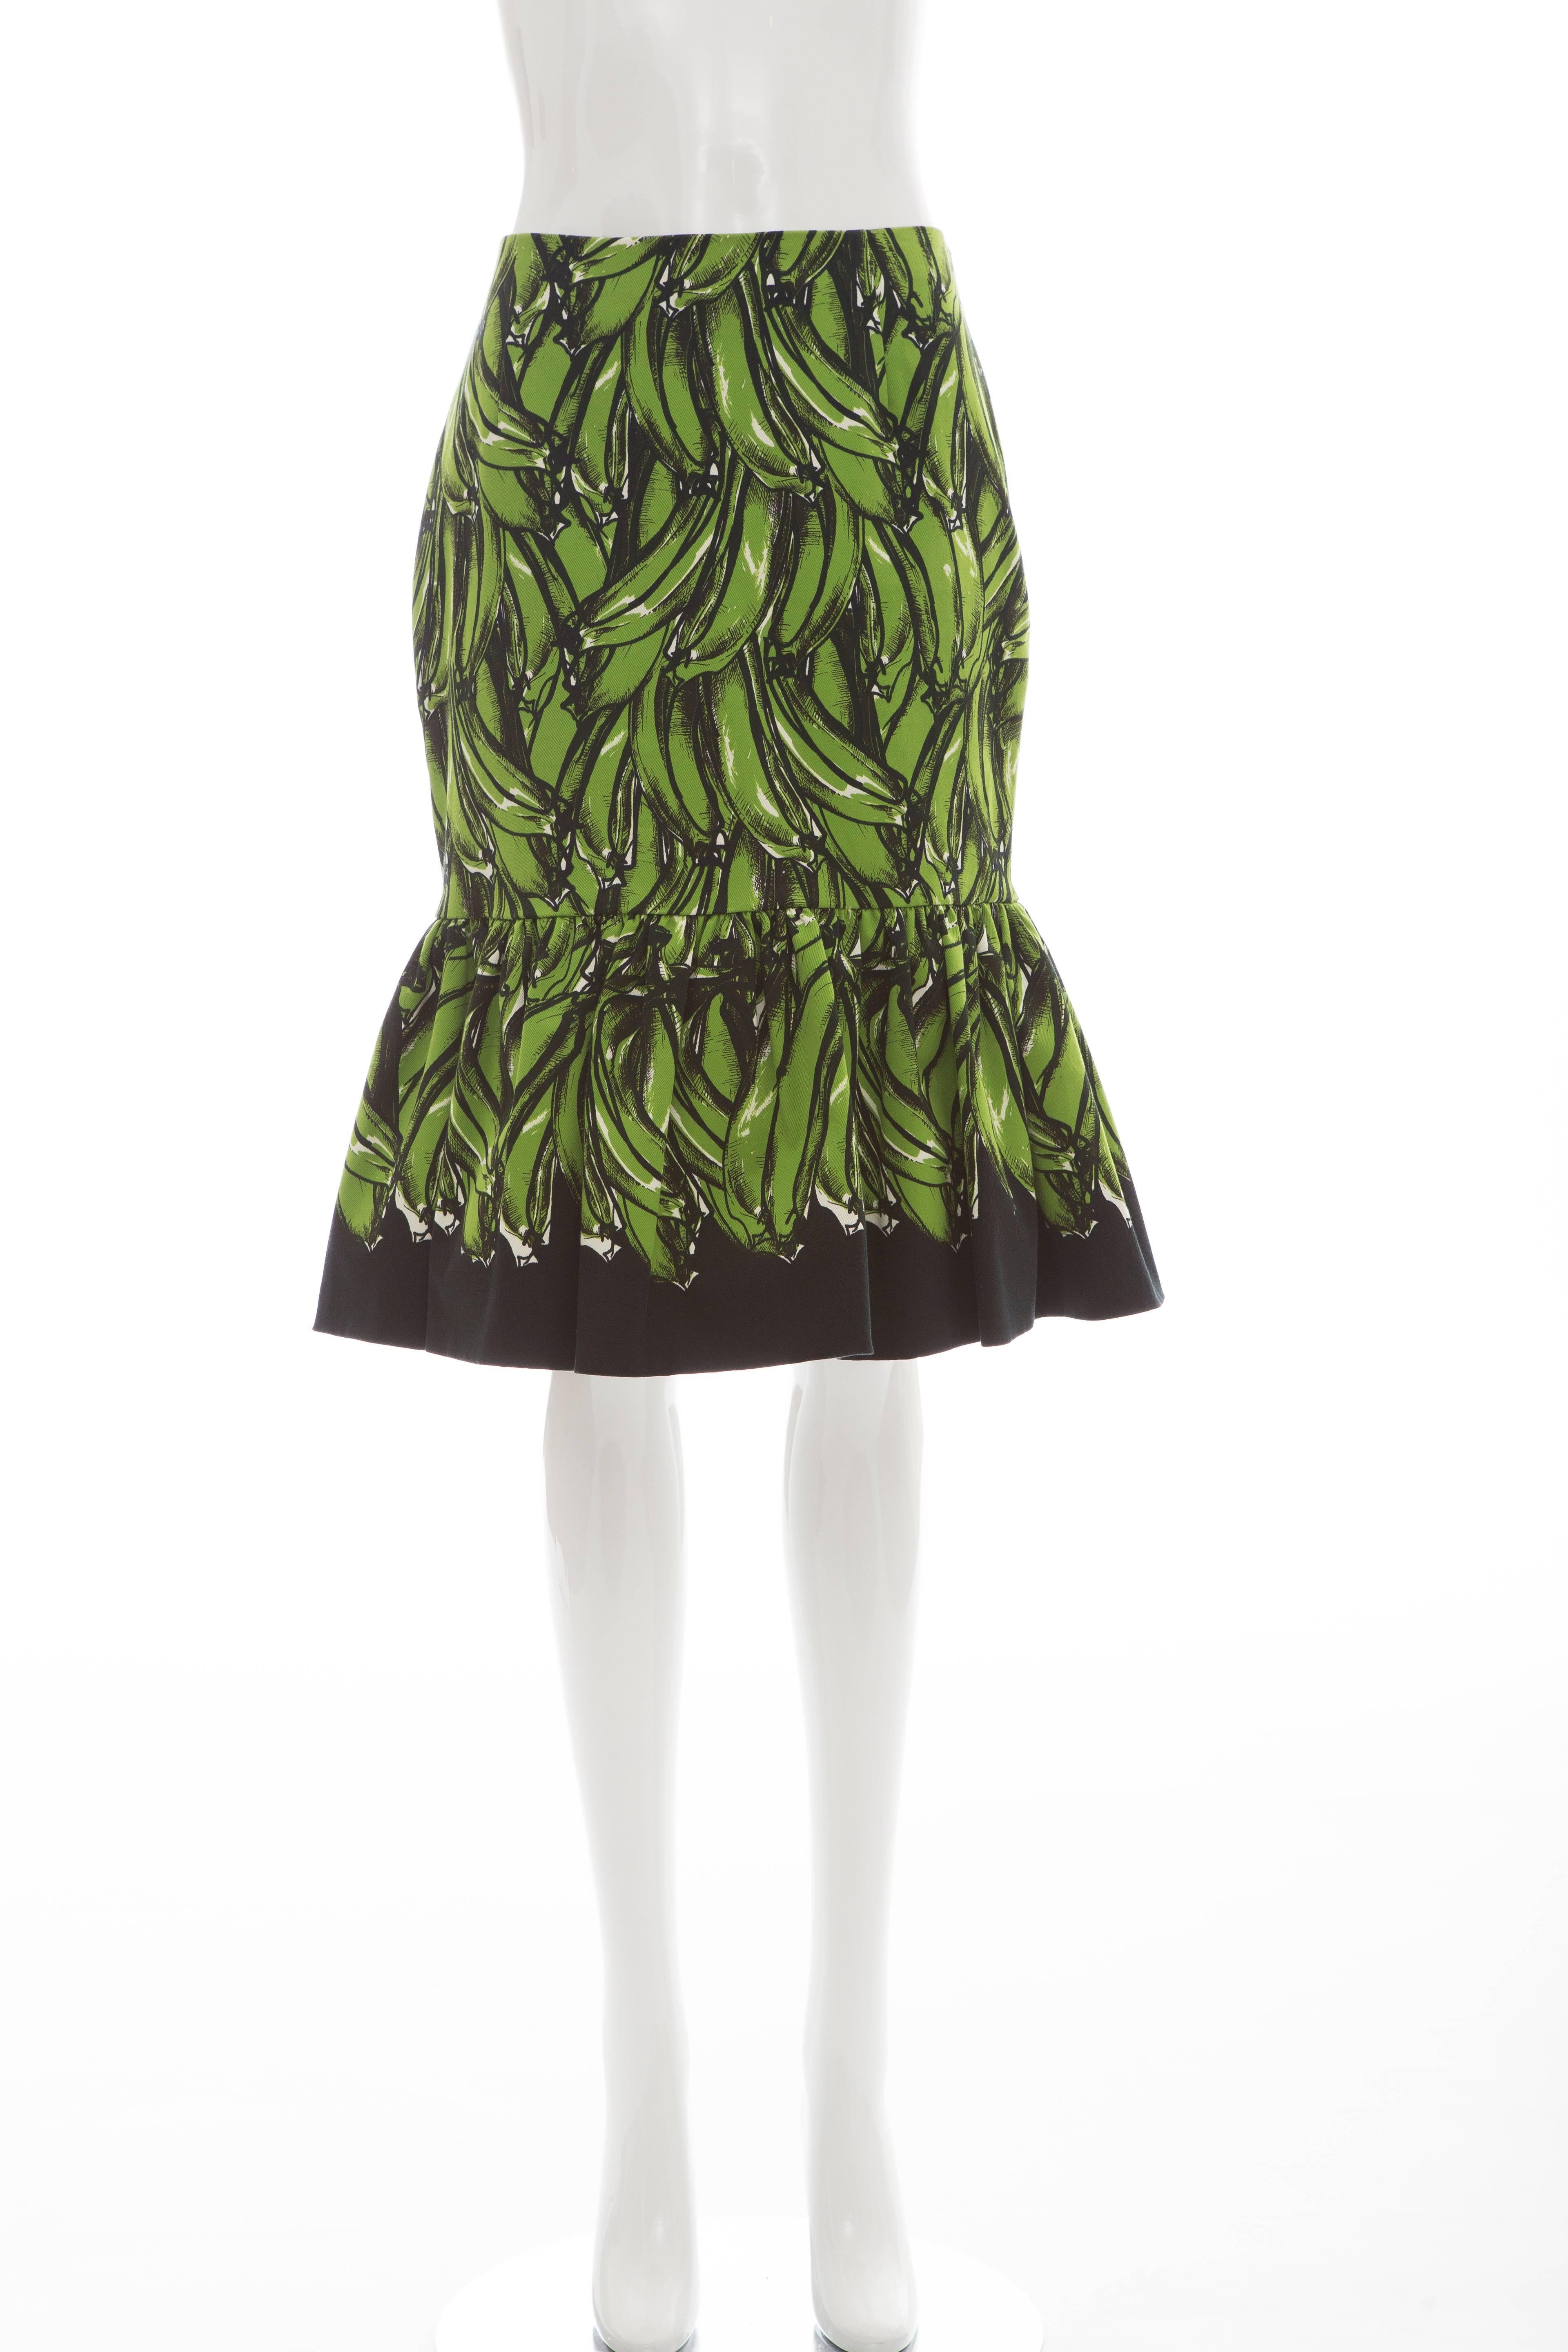 Prada, Spring-Summer 2011 cotton banana print skirt with flared hem and invisible zip closure at side seam.

IT. 42
US. 6

Waist 26”, Hip 34”, Length 24”